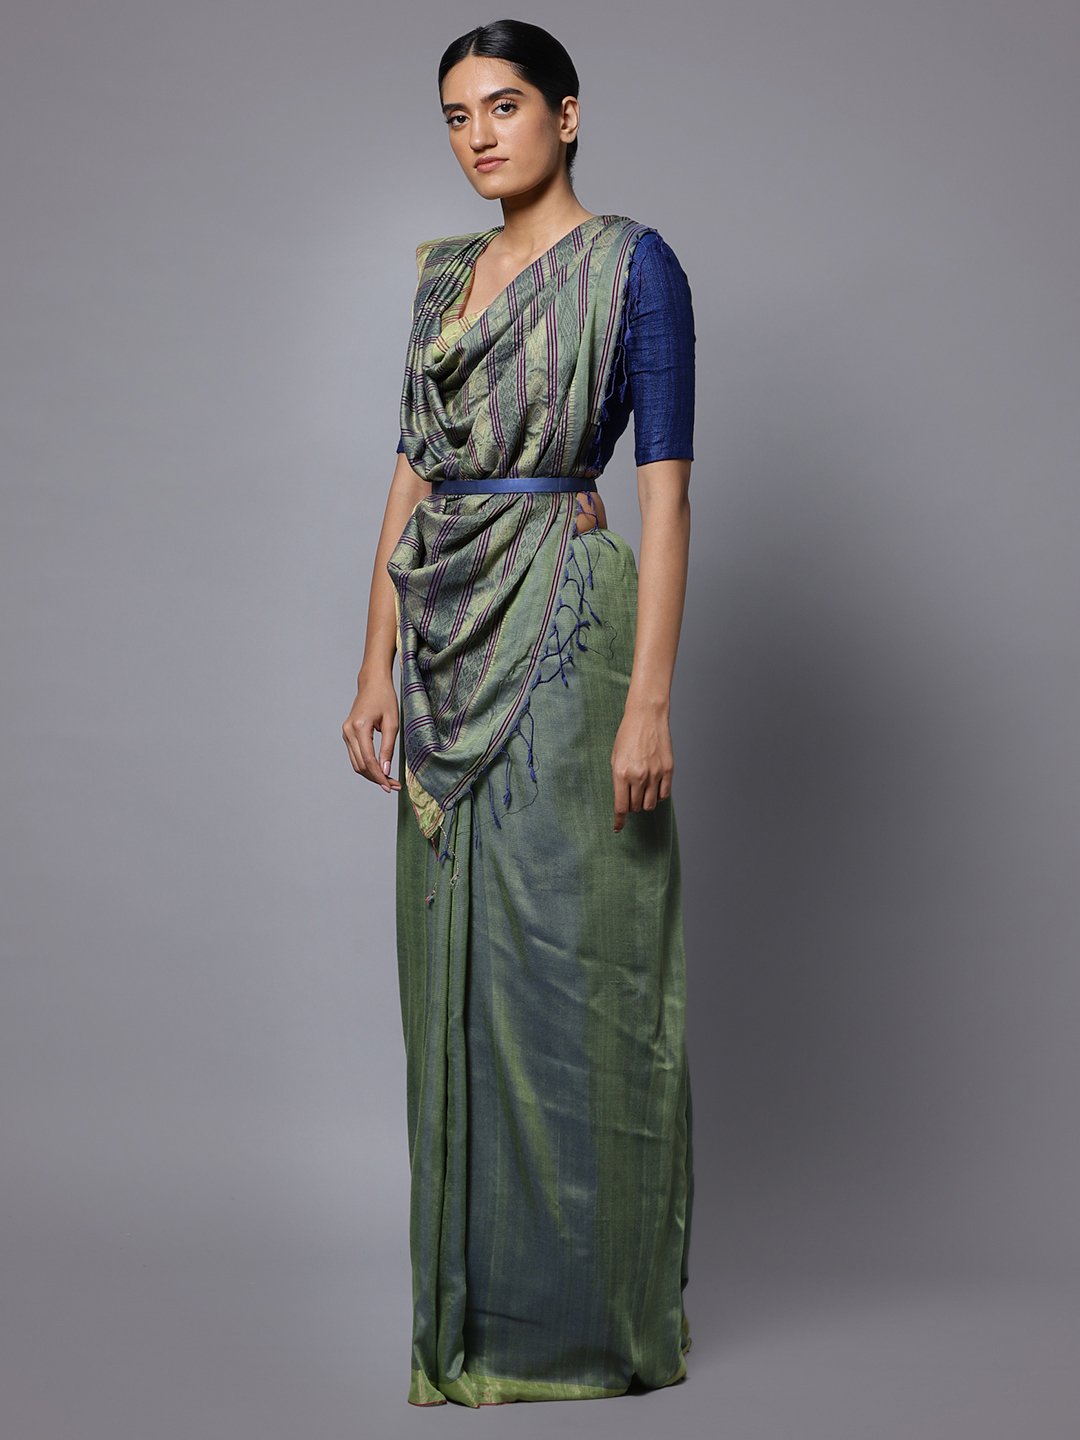 Blue green bengal soft cotton handloom saree